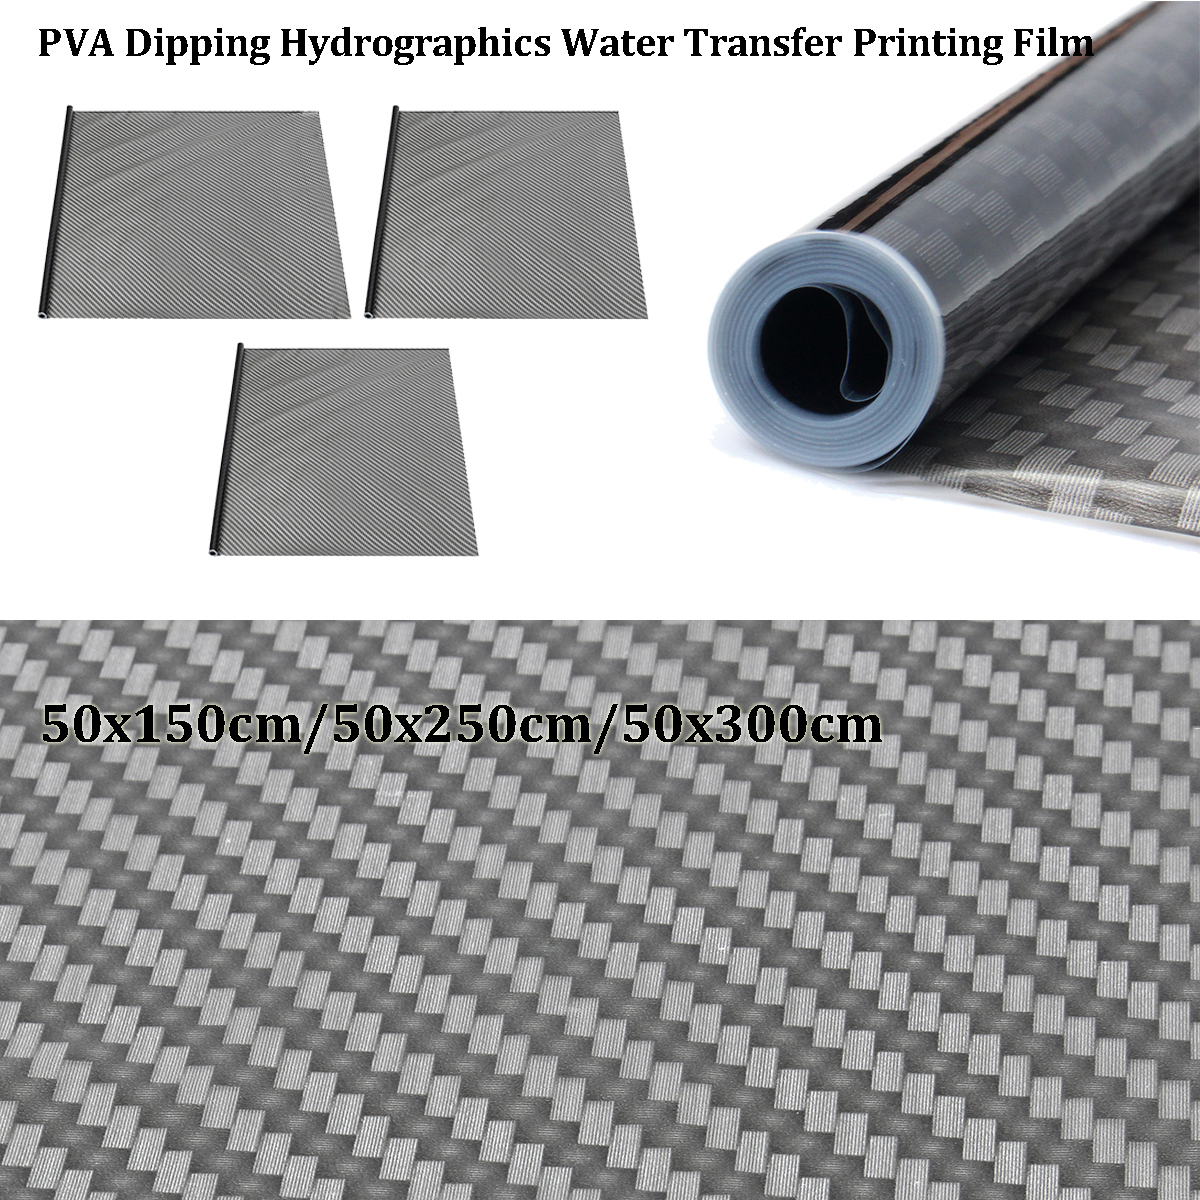 Water-Transfer-Printing-Film-Hydrographic-Film-Hydro-Dip-Carbon-Fiber-1194078-1